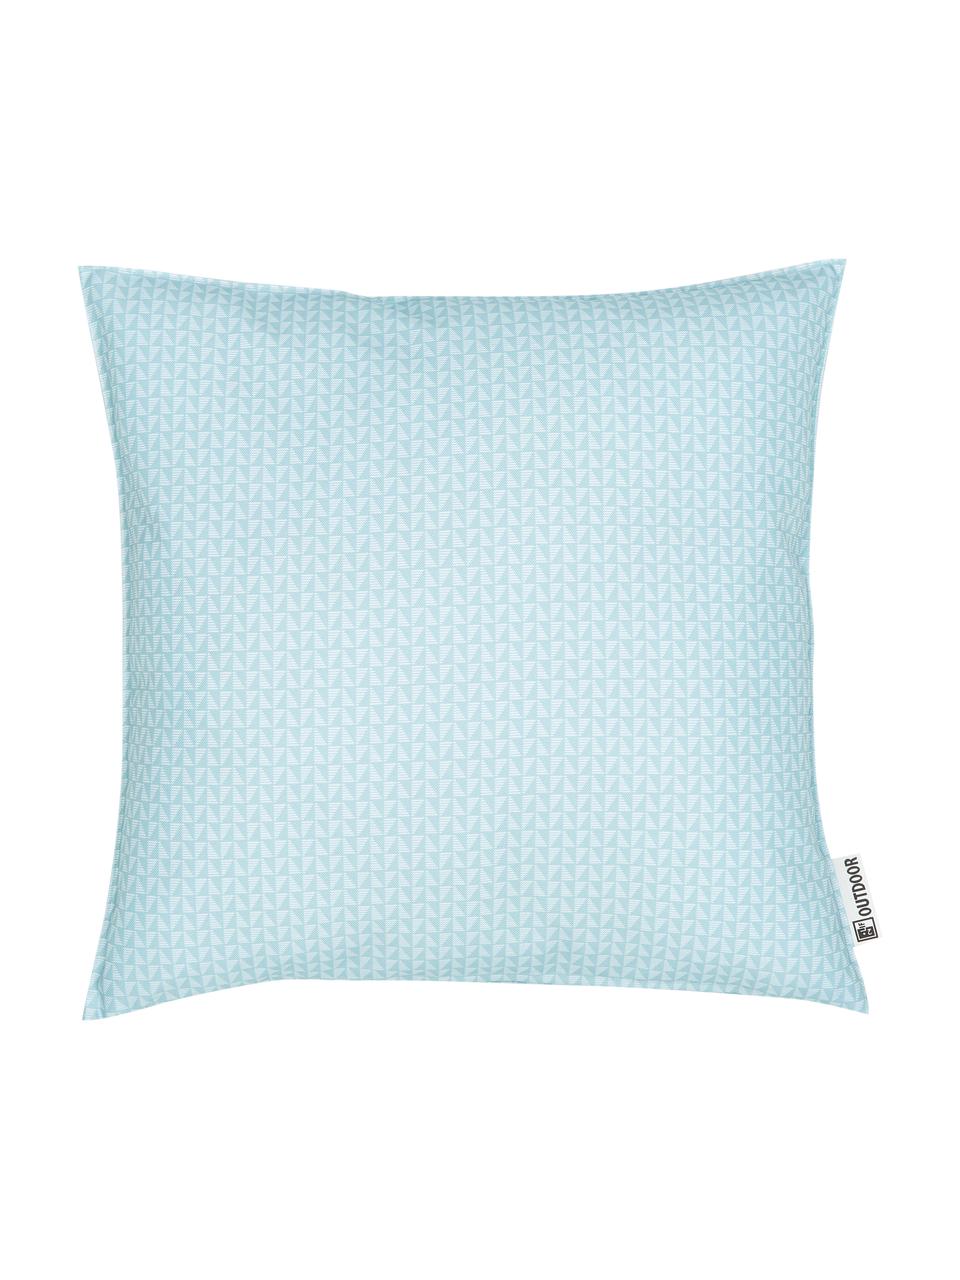 Outdoor kussen met patroon Rhombus, 100% polyester, Blauw, lichtblauw, 47 x 47 cm